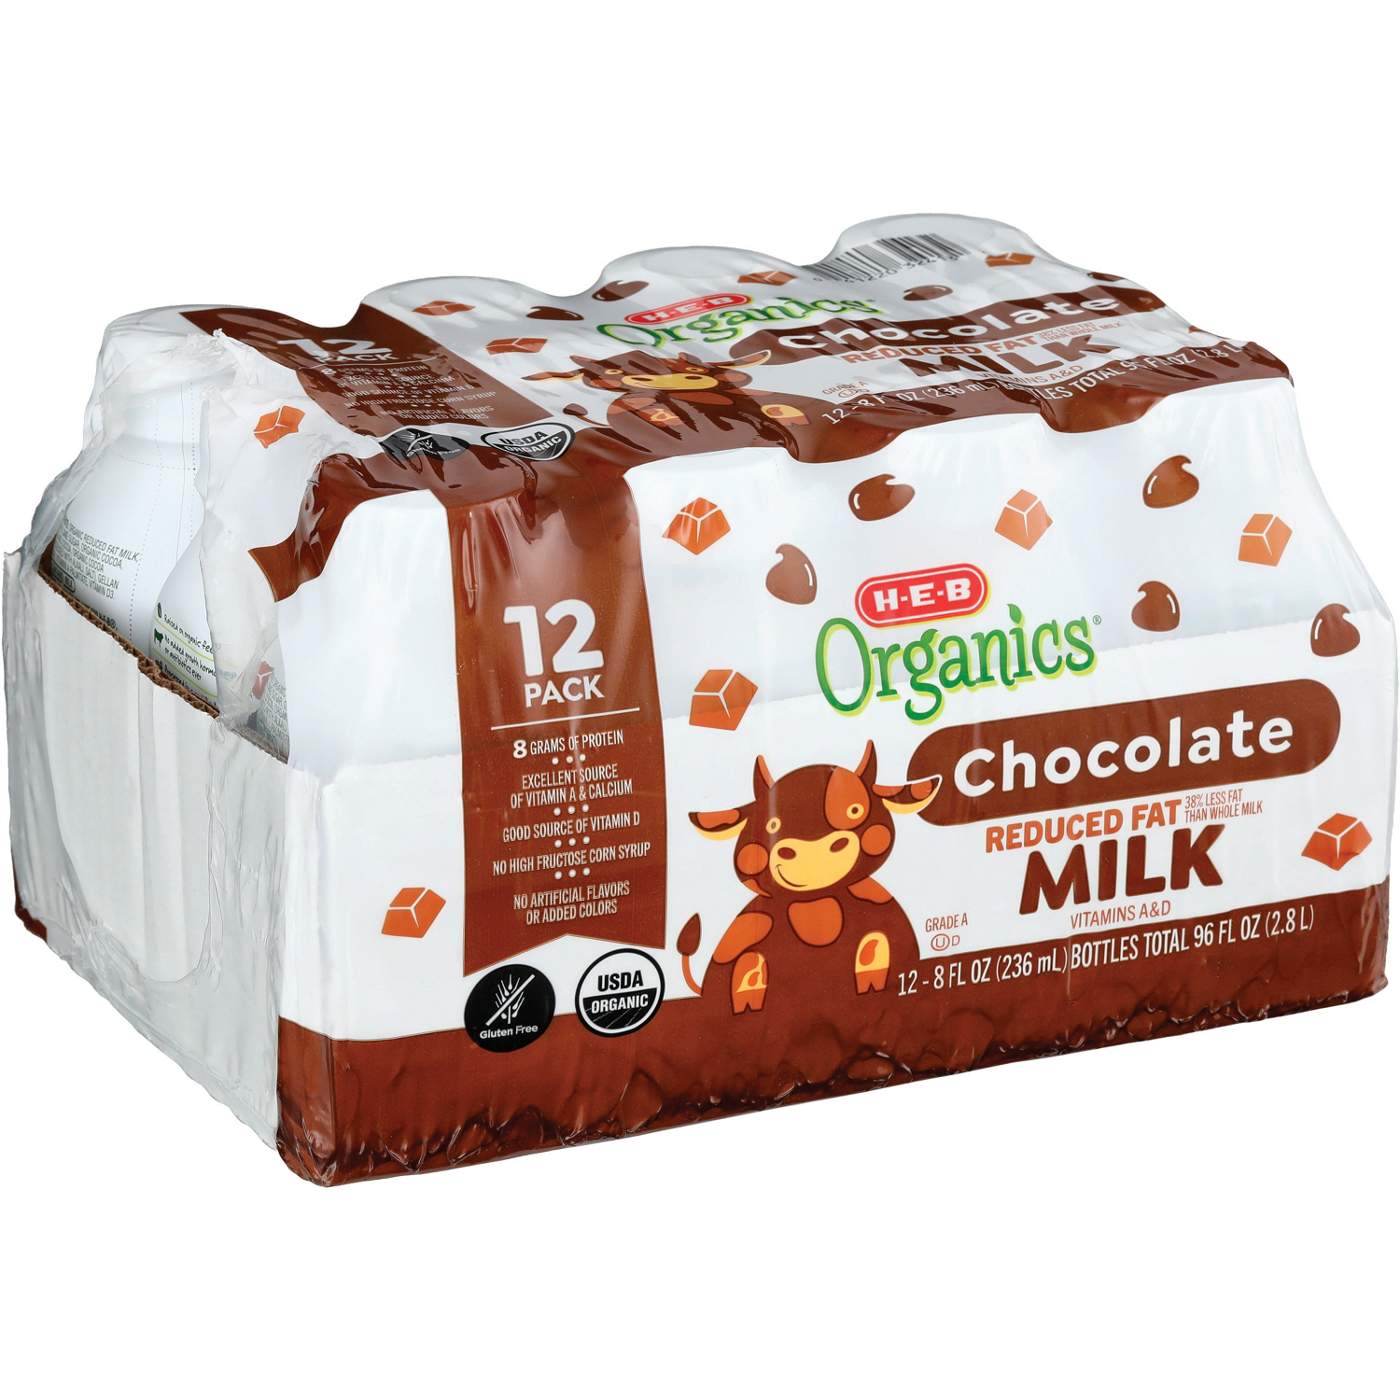 H-E-B Organics 2% Reduced Fat Chocolate Milk 12 pk Bottles; image 2 of 2